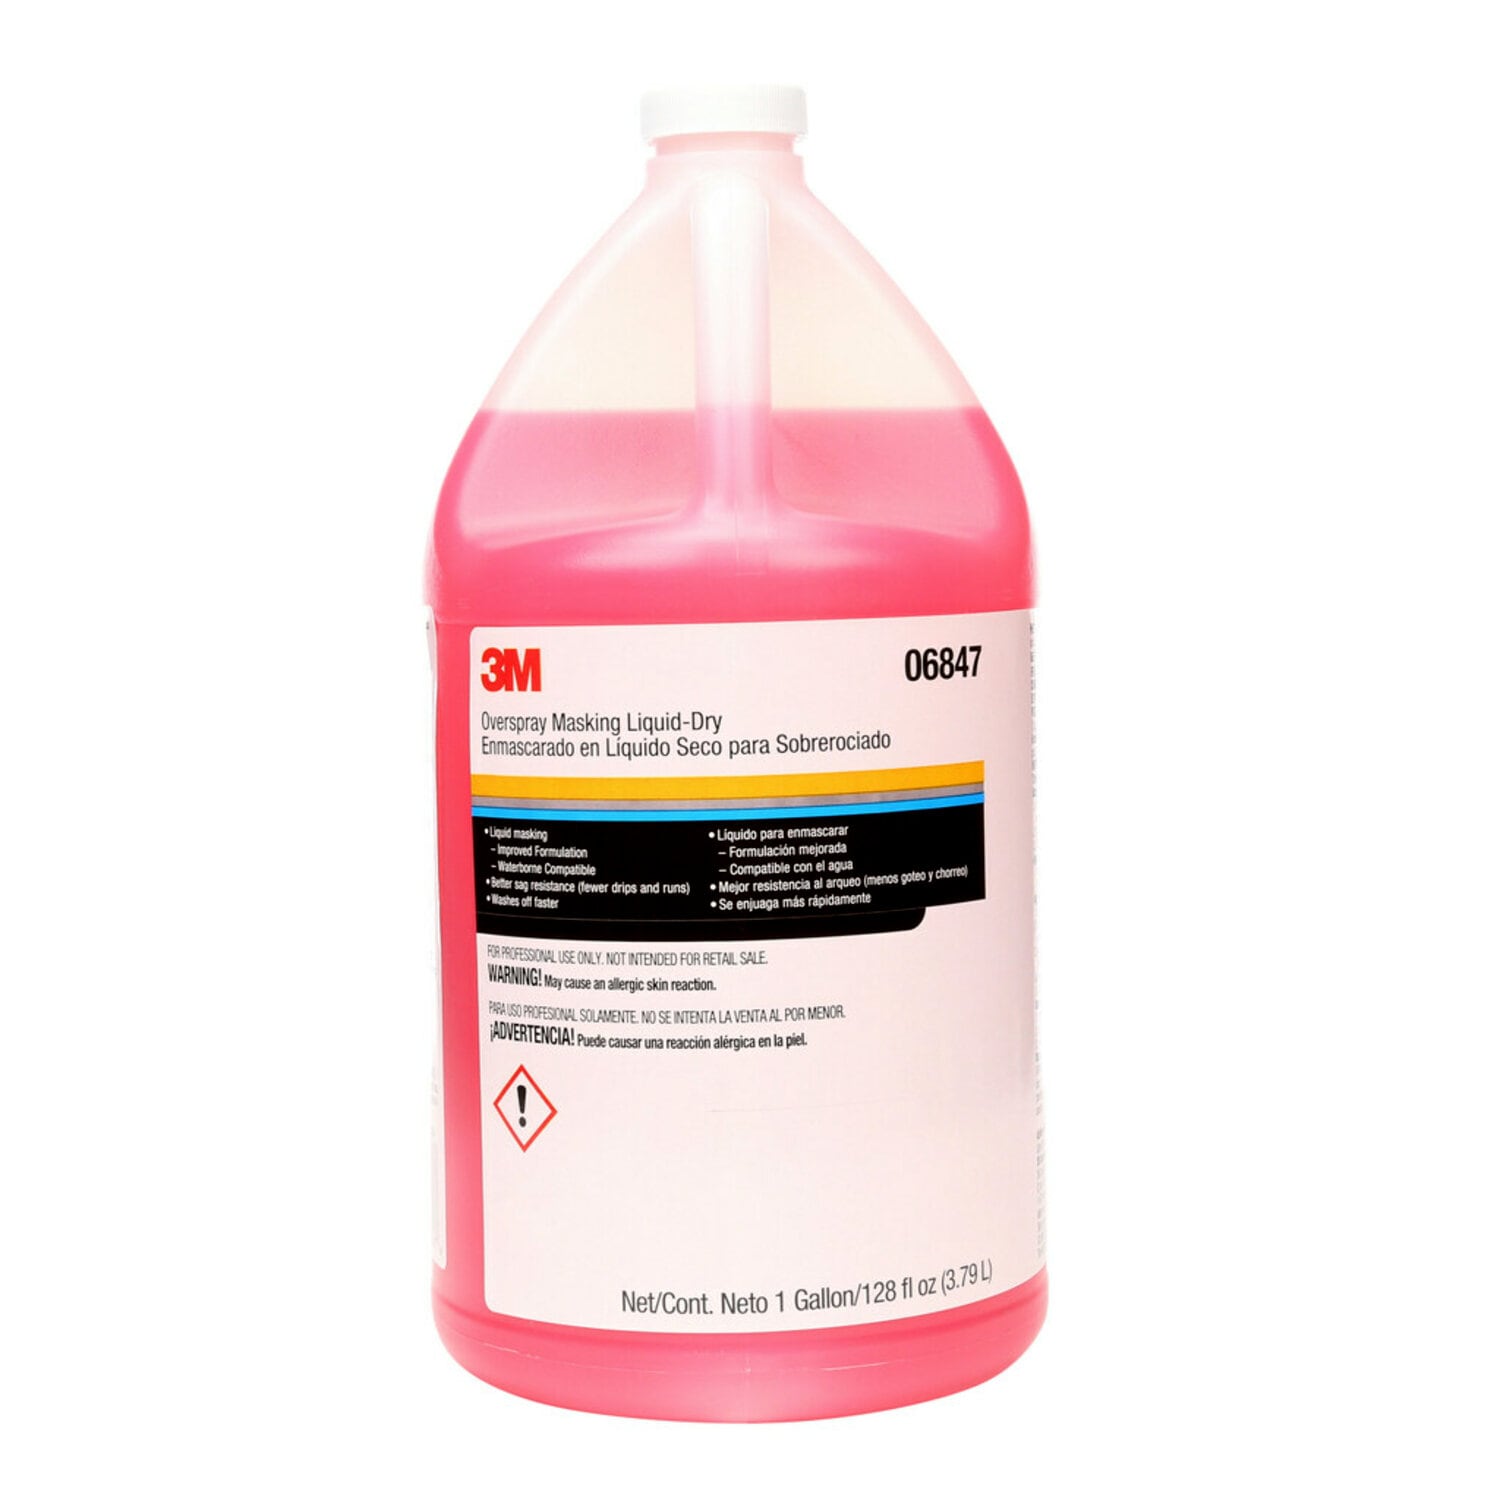 7000045767 - 3M Overspray Masking Liquid Dry, 06847, 1 gal, 4 per case